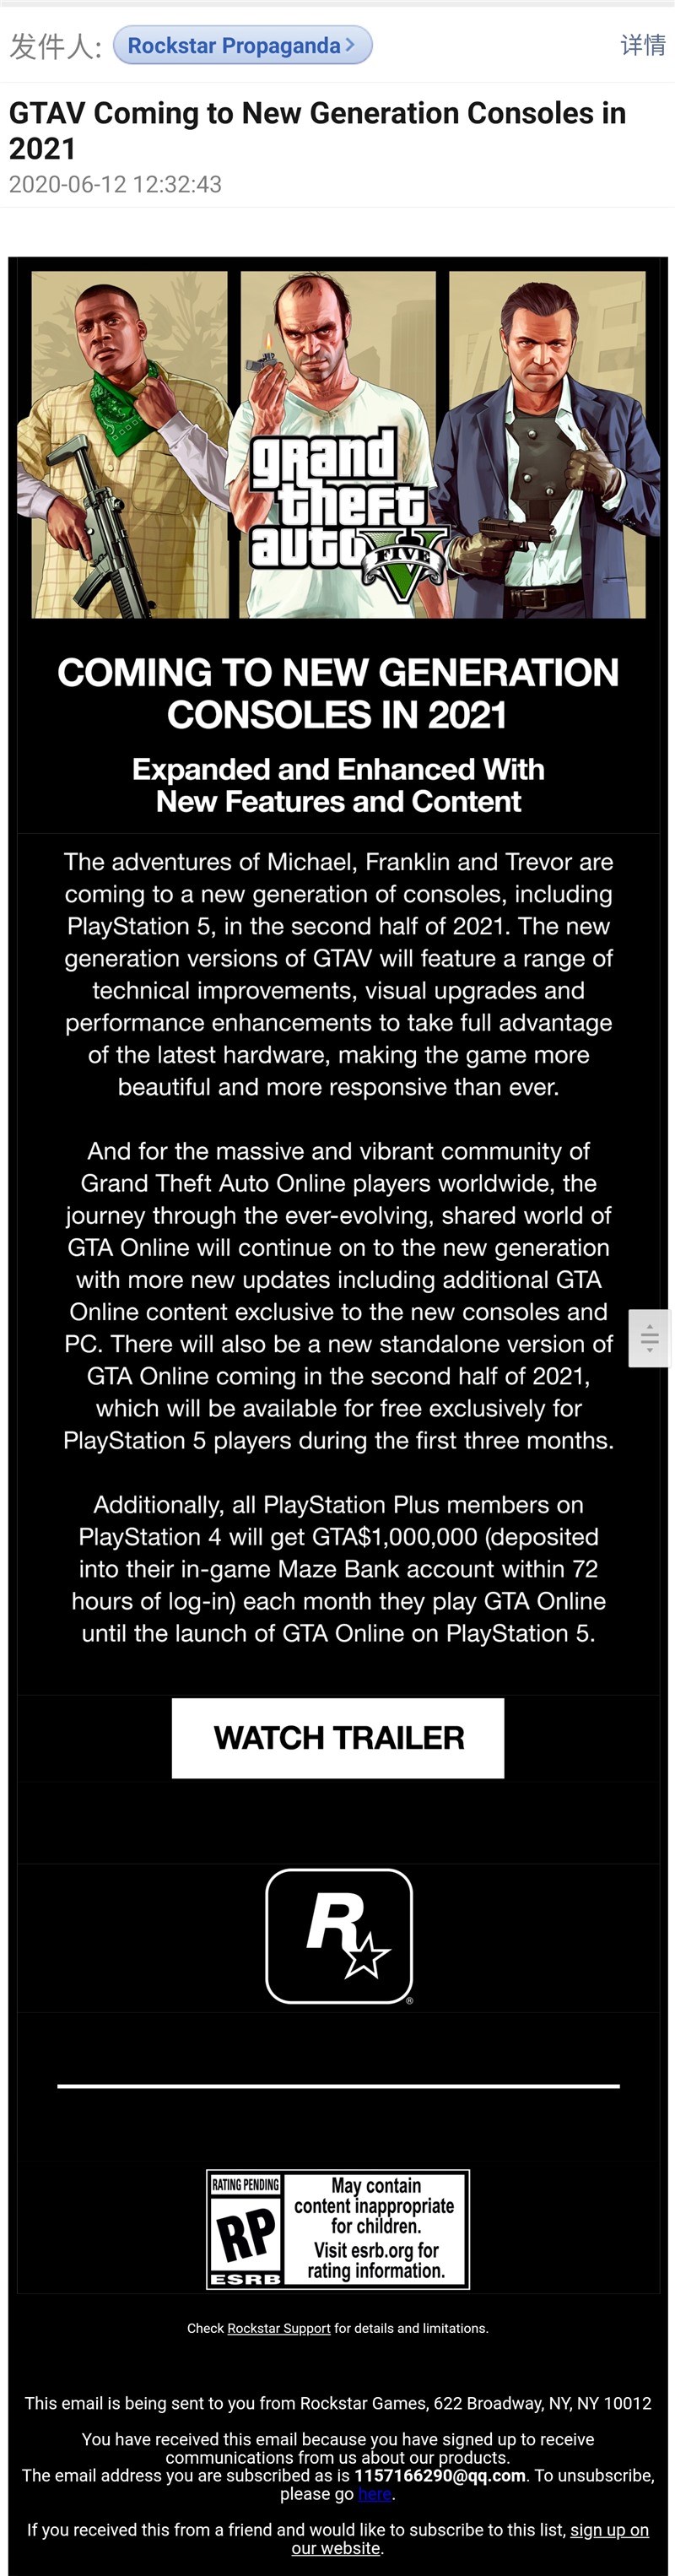 R 星官方邮件：《GTA 5》PS5 版本将于 2021 年发布，视觉升级和性能增强